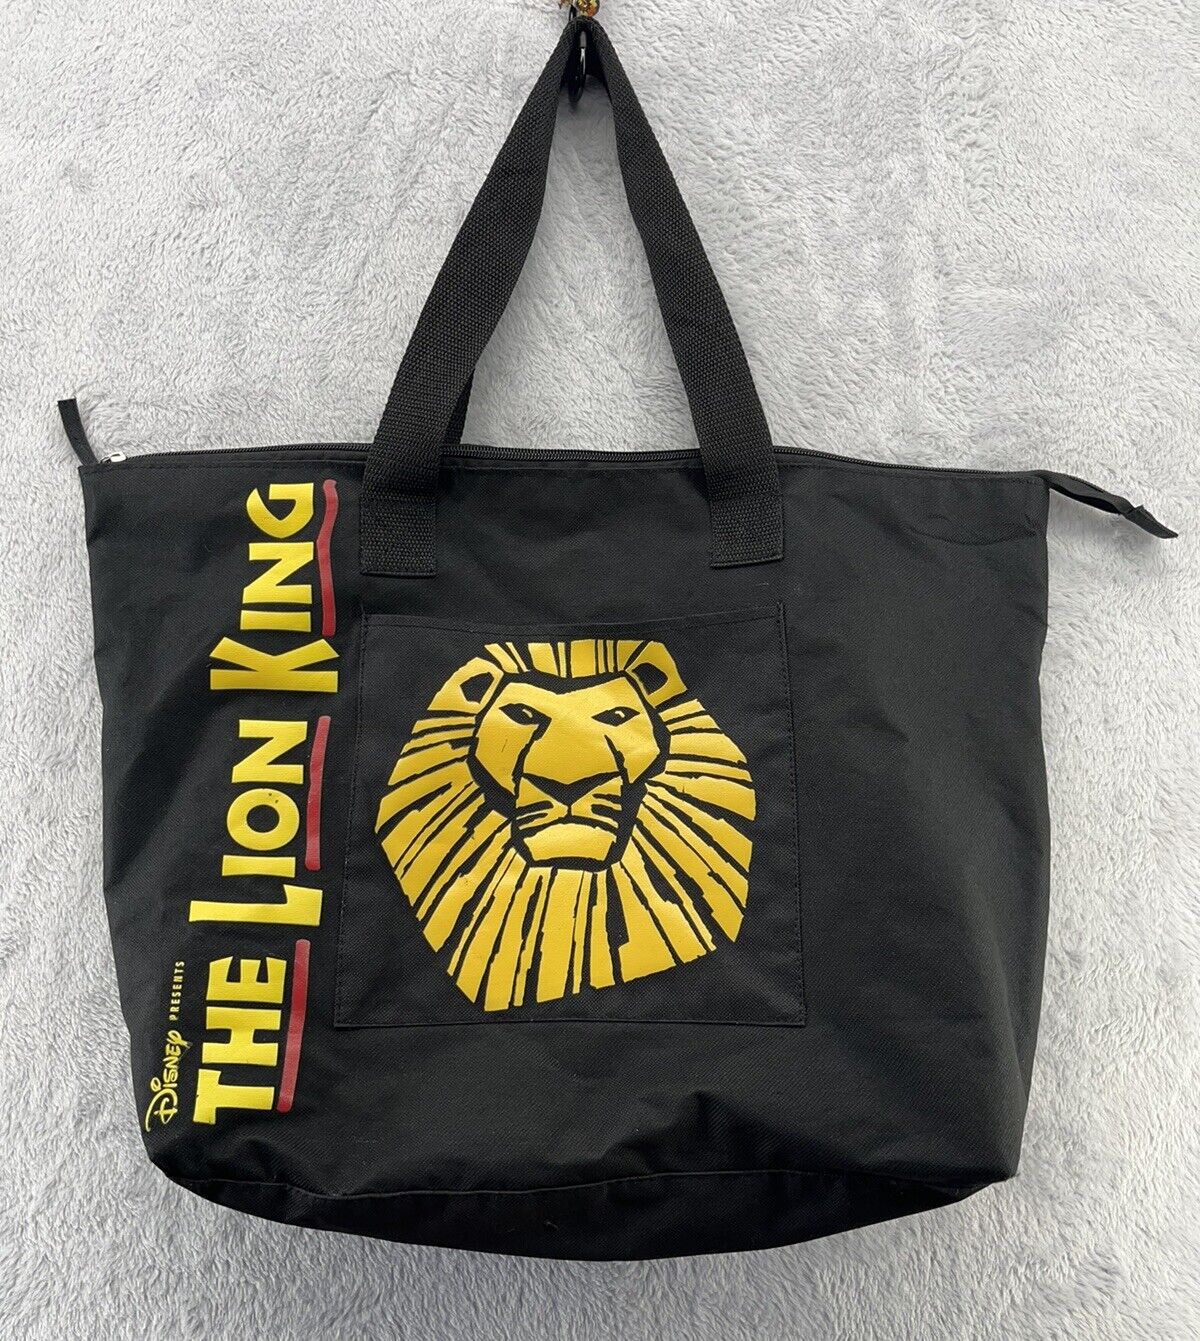 Lion King Bag Disney Presents The Lion King Musical Broadway Show Tote Bag Simba